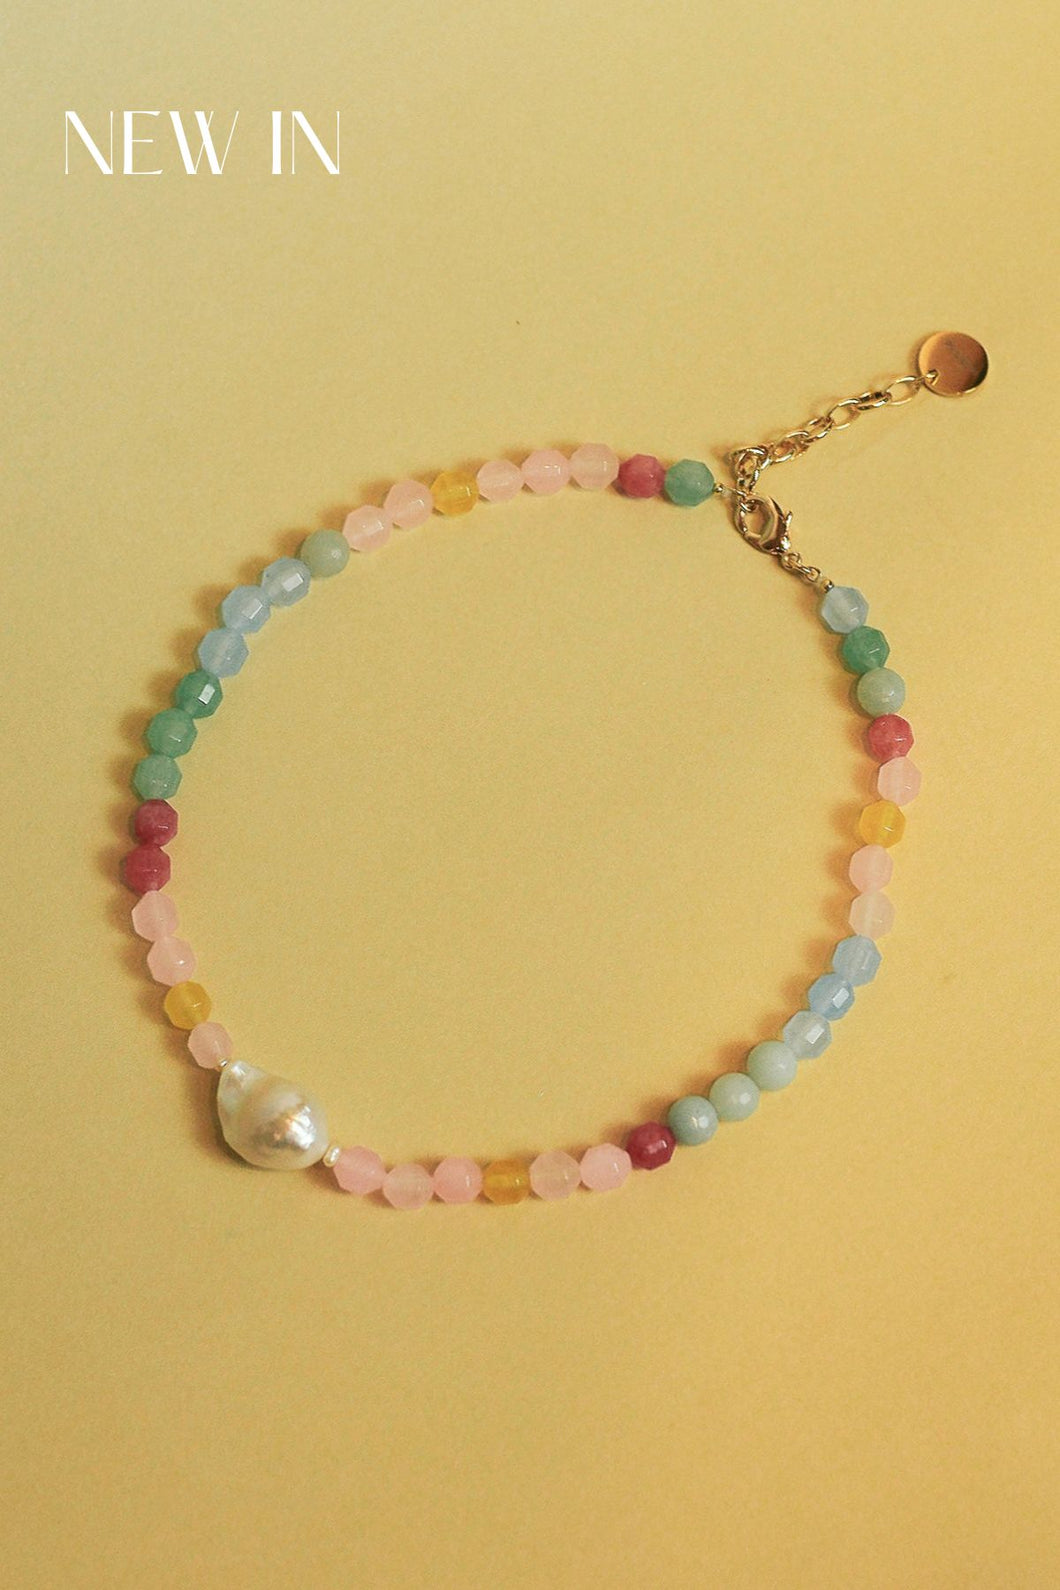 Rainbow pearl & colorful semi-precious stones necklace